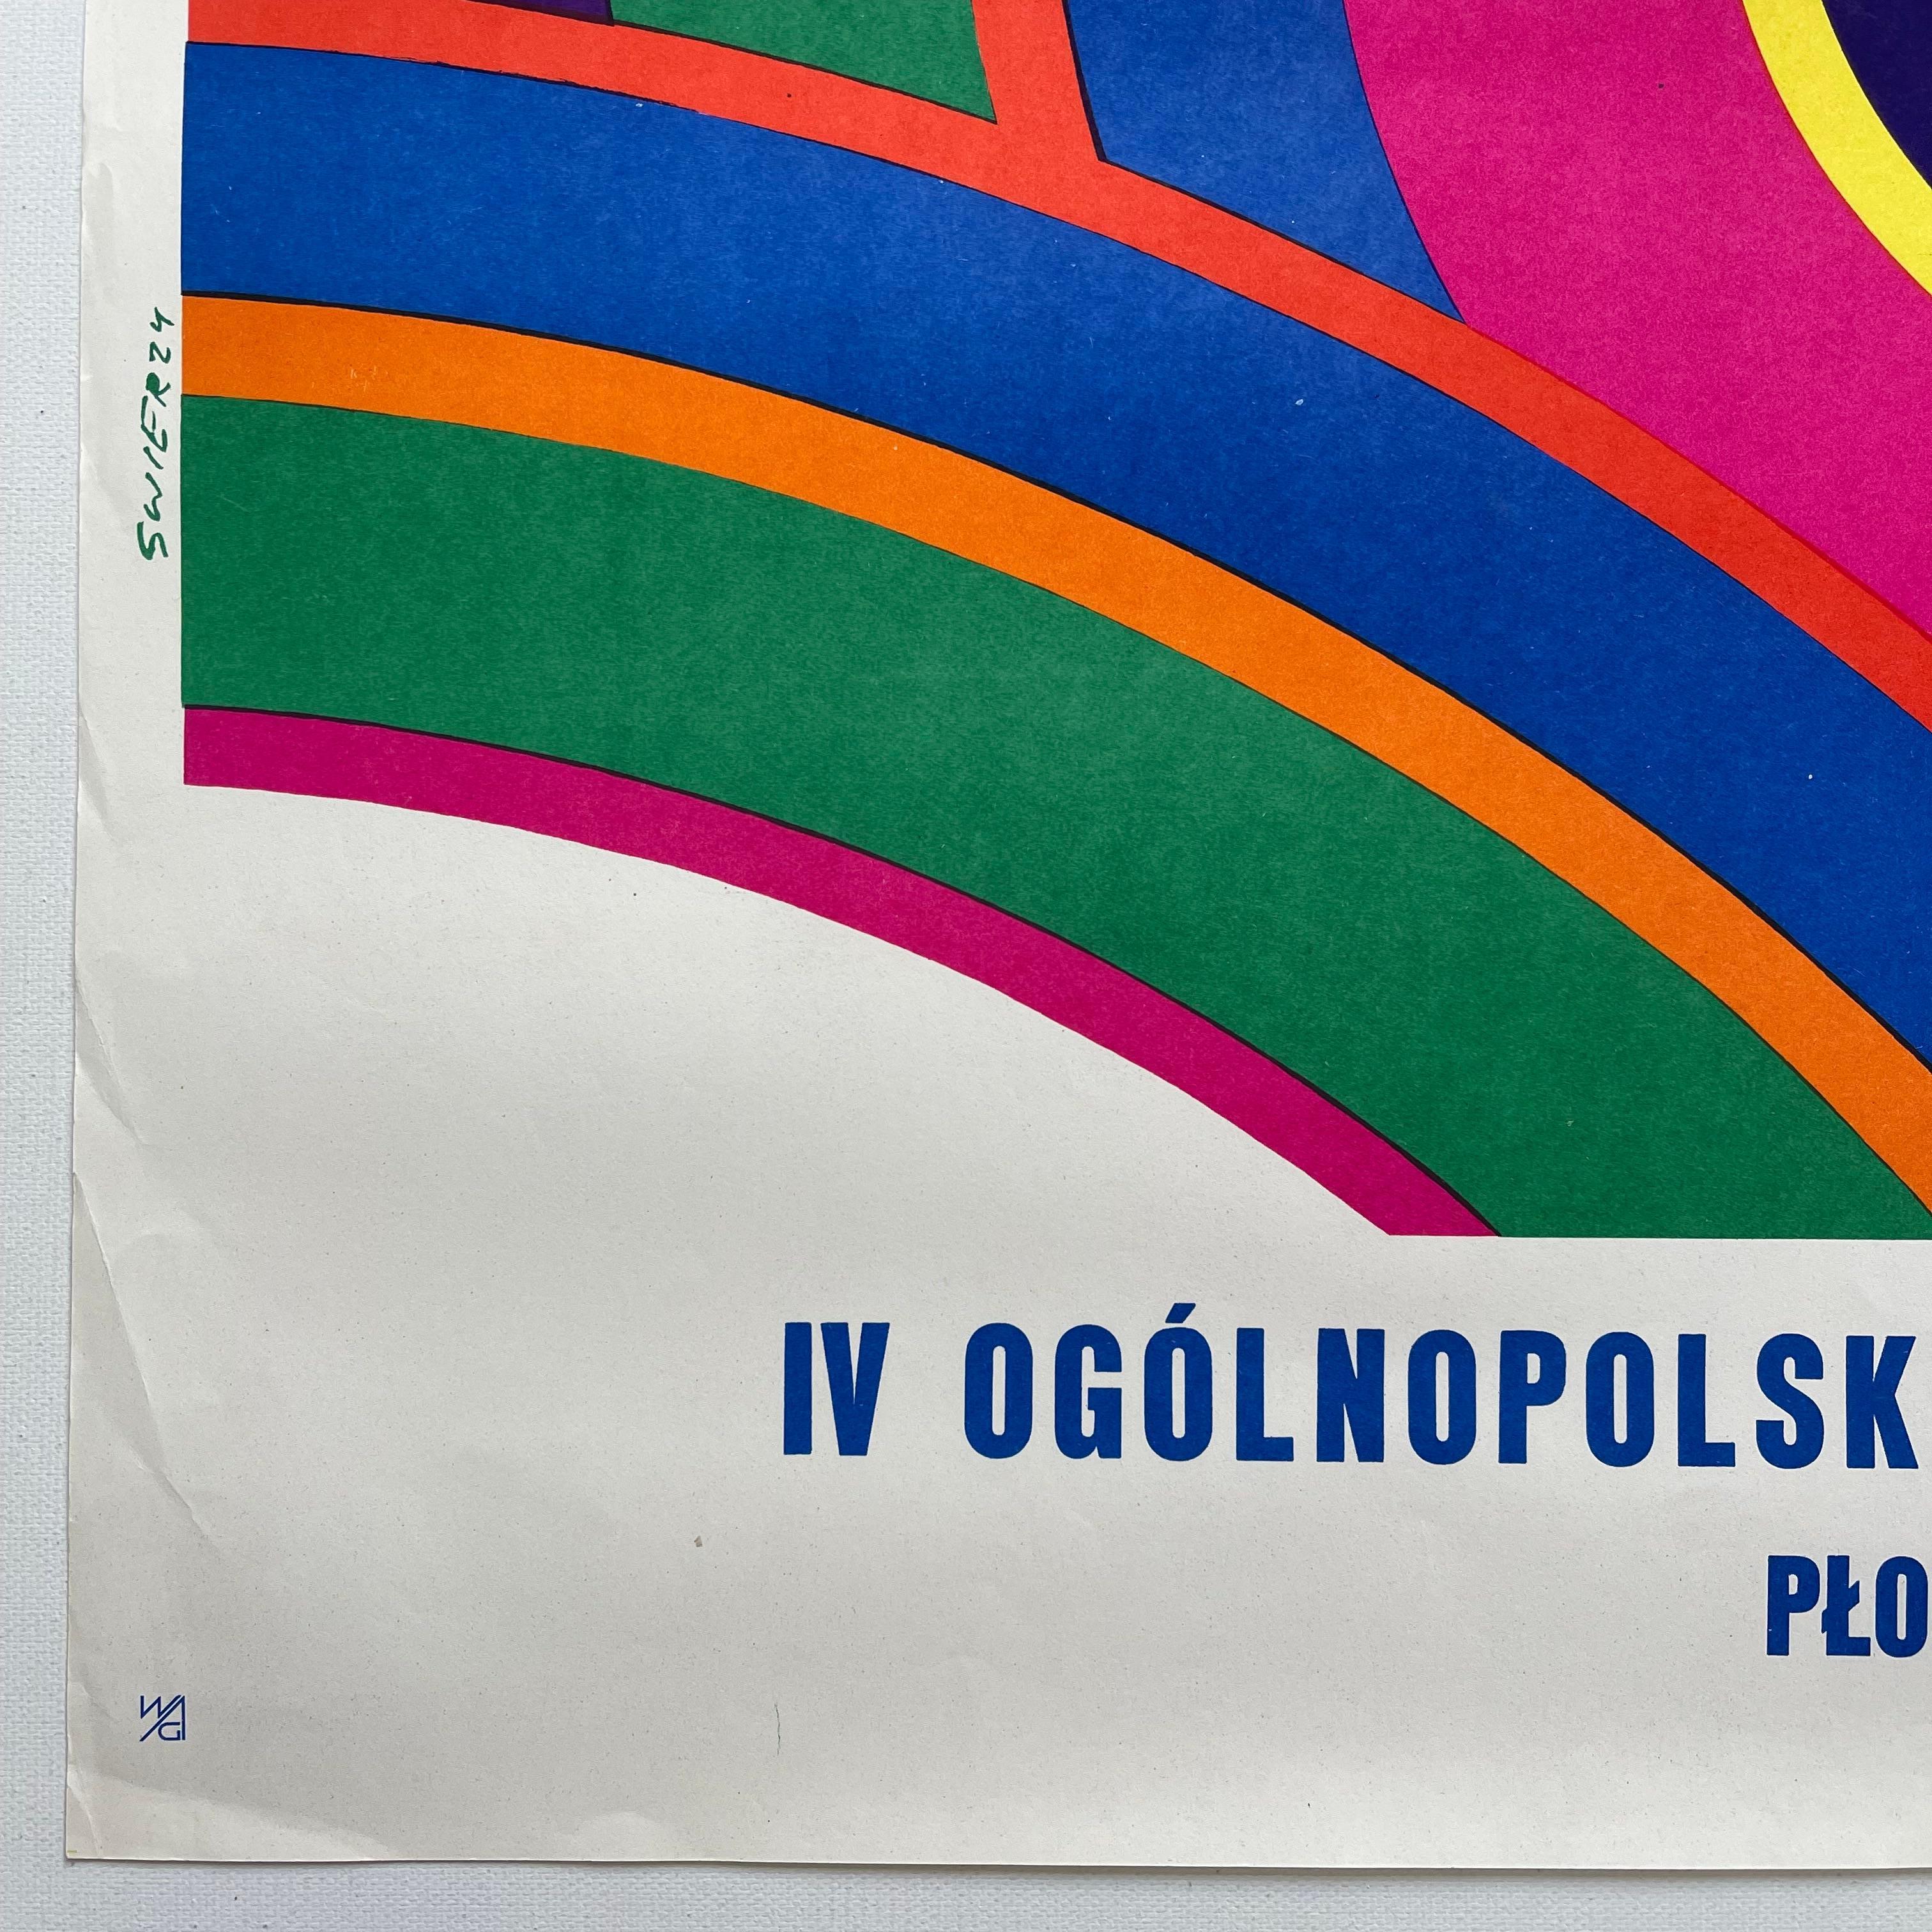 Other 4th National Folk Festival, Vintage Polish Poster by Waldemar Swierzy, 1970 For Sale